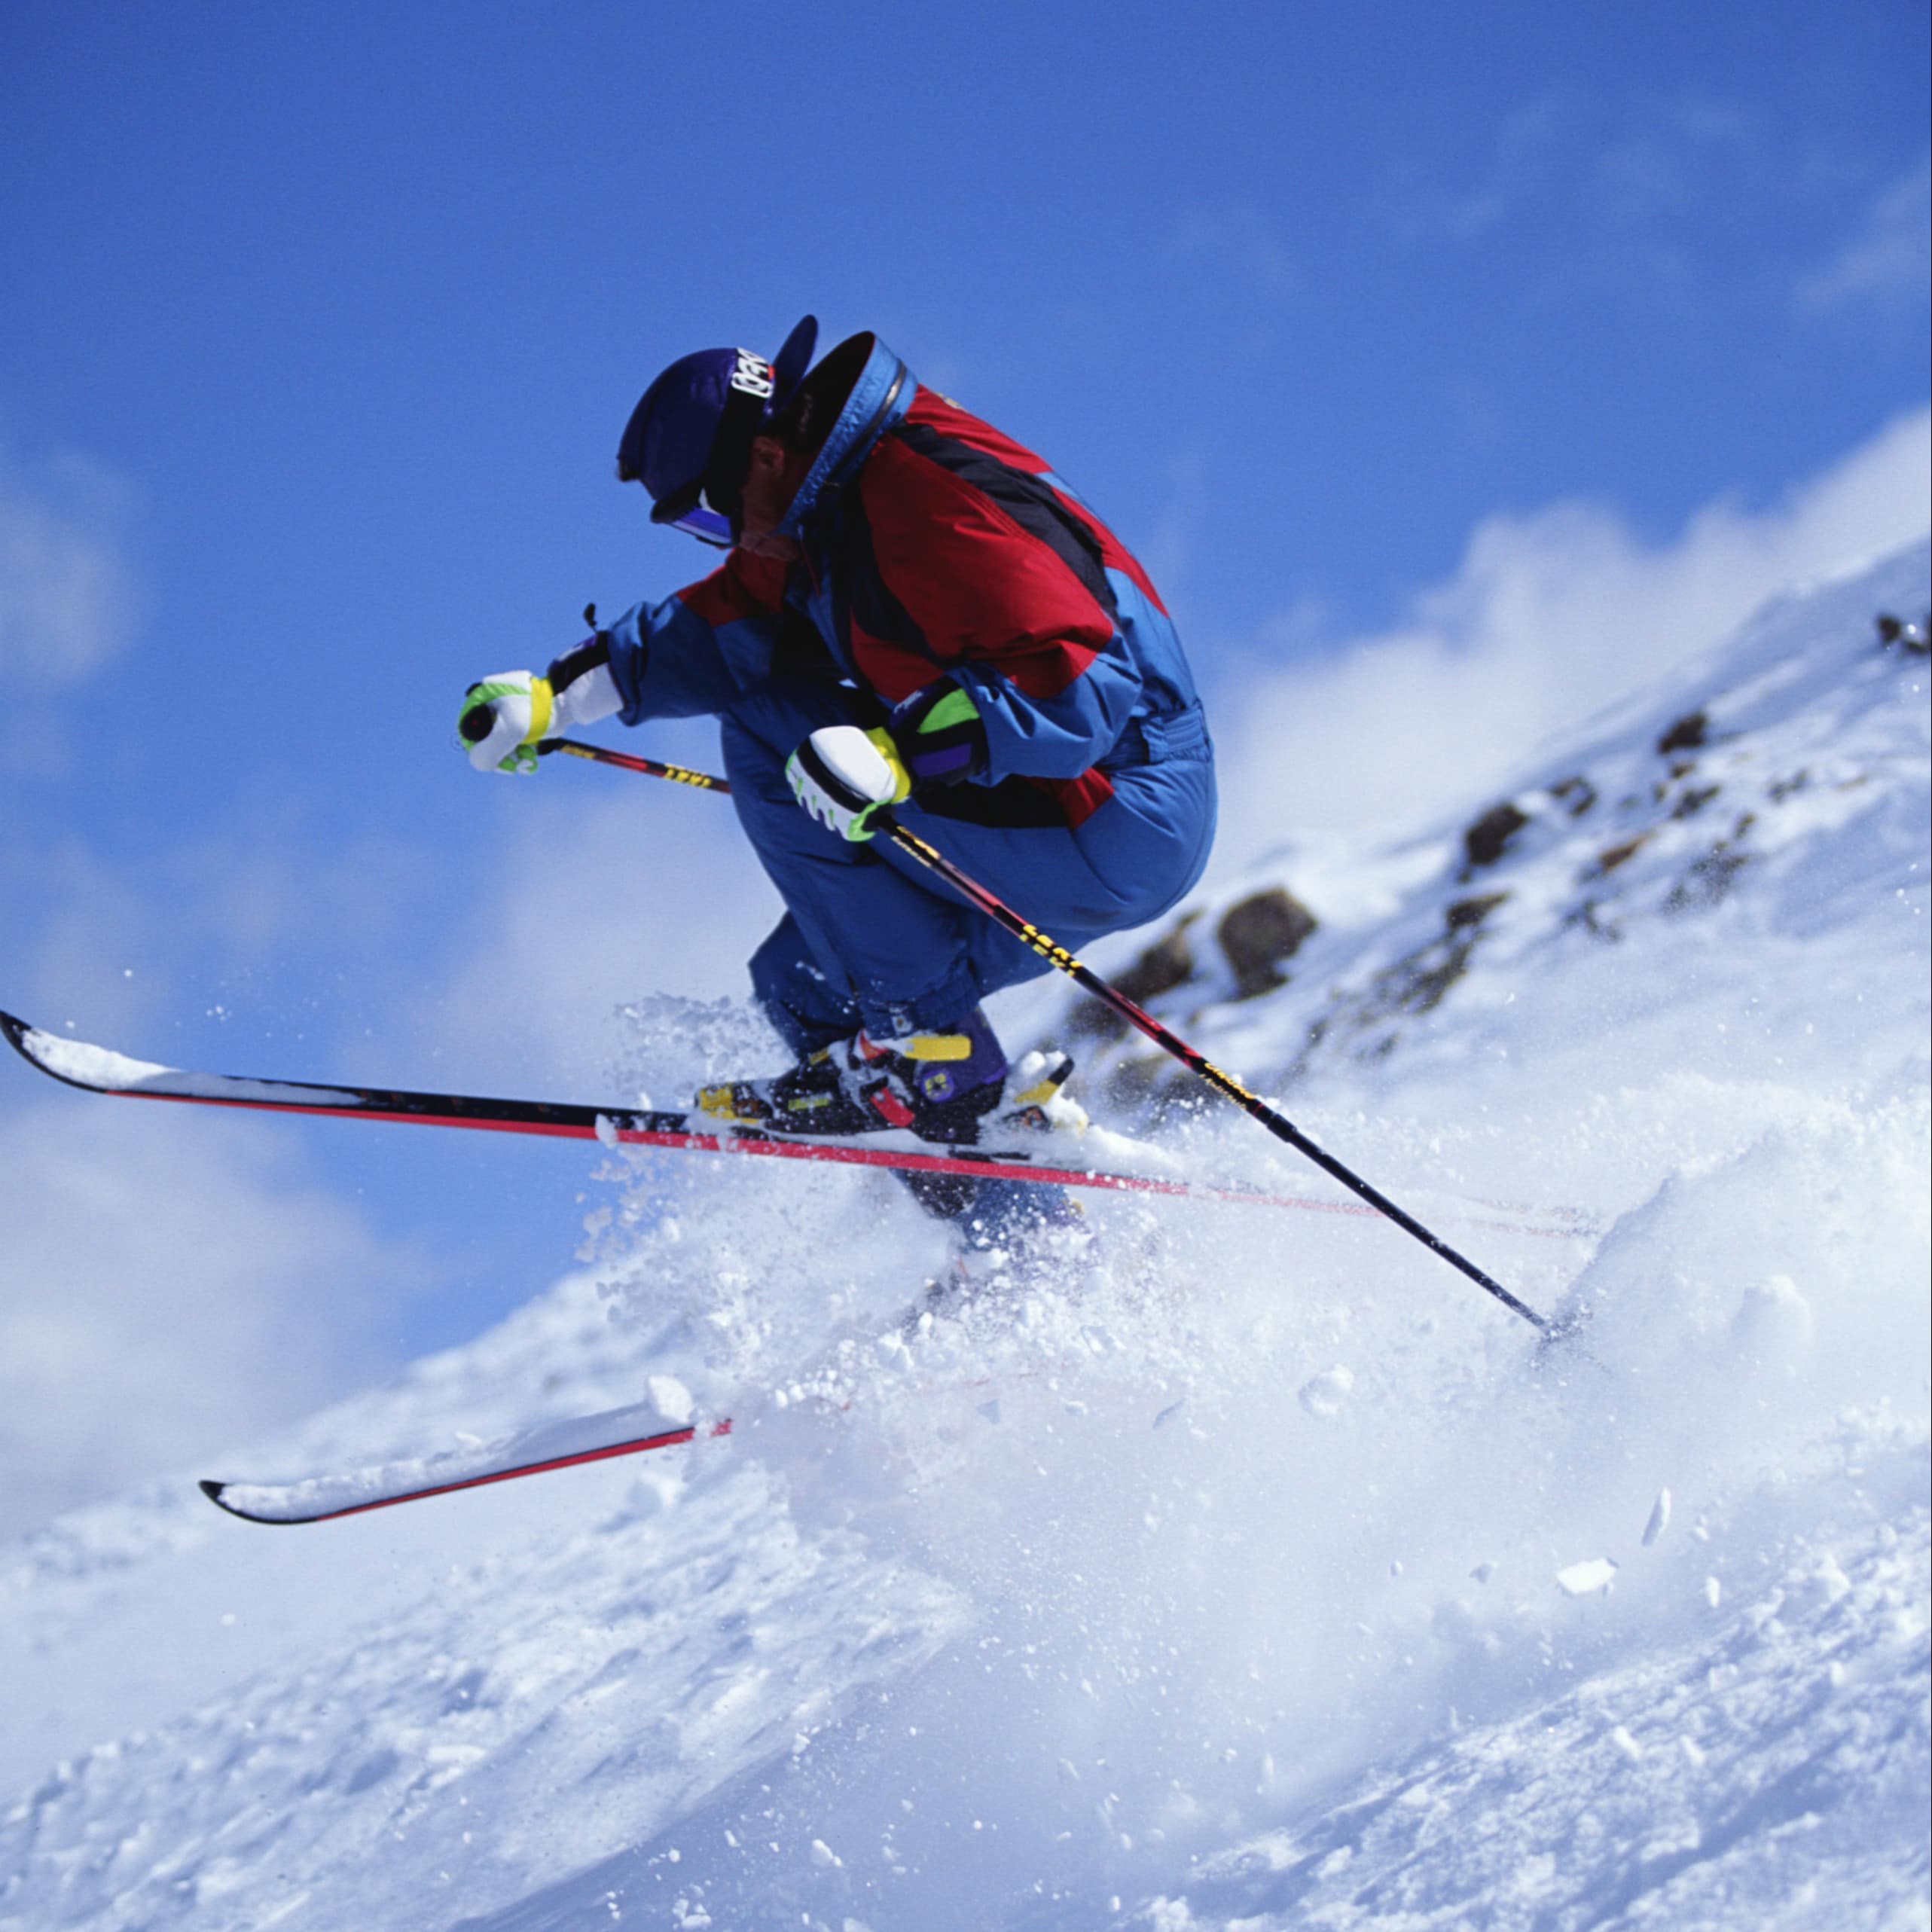 Man speeding down a slope on skis